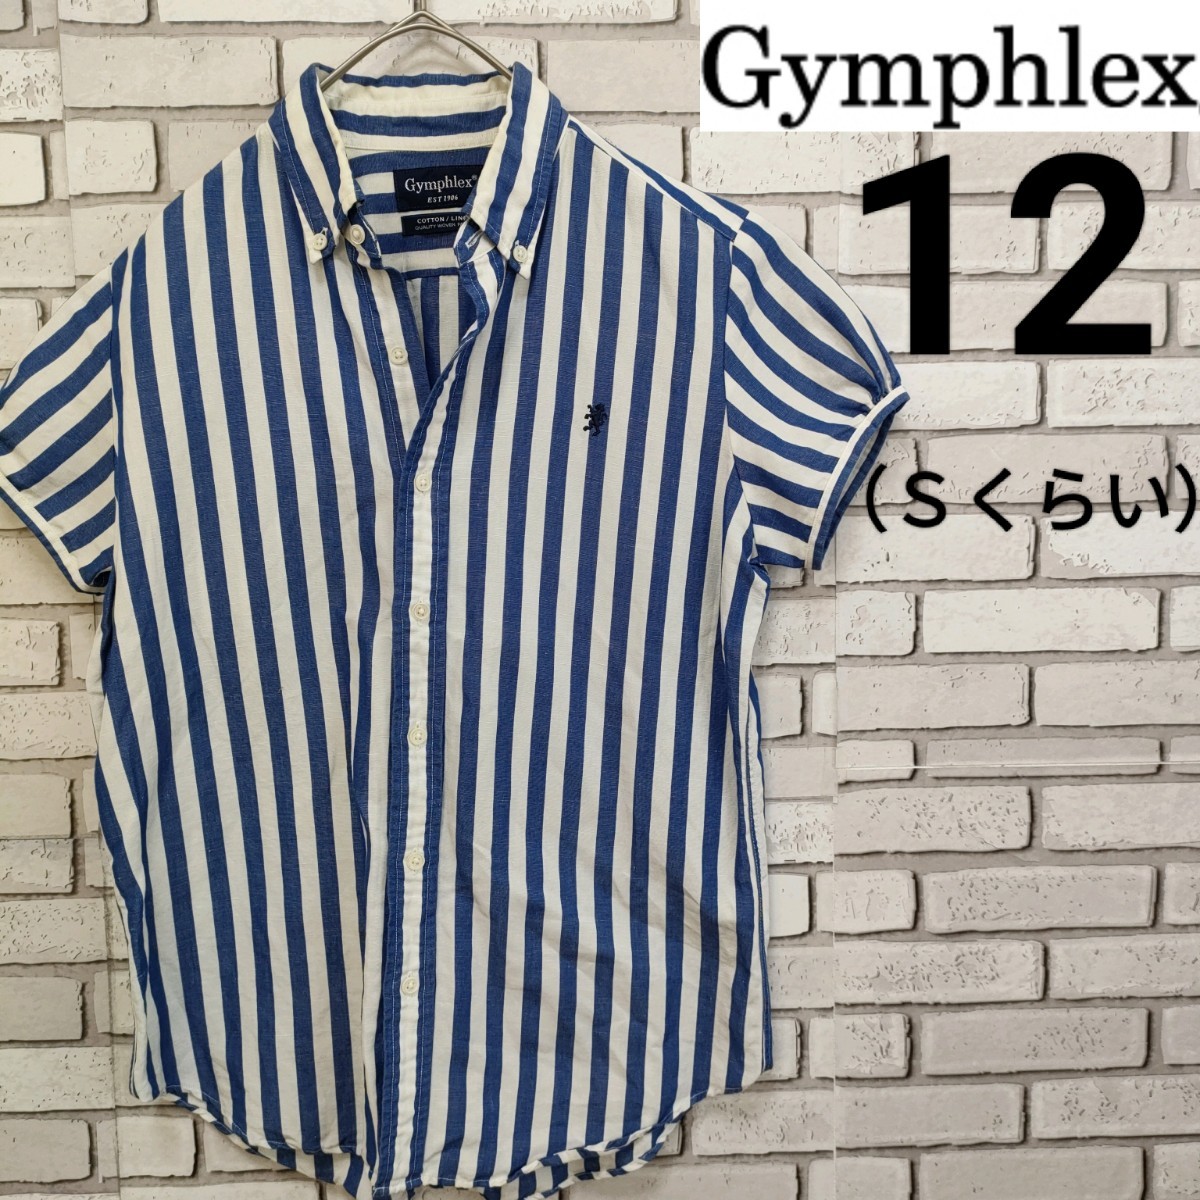 Gymphlex 半袖ストライプシャツ 12 白×青 M102 ジムフレックス ボタン